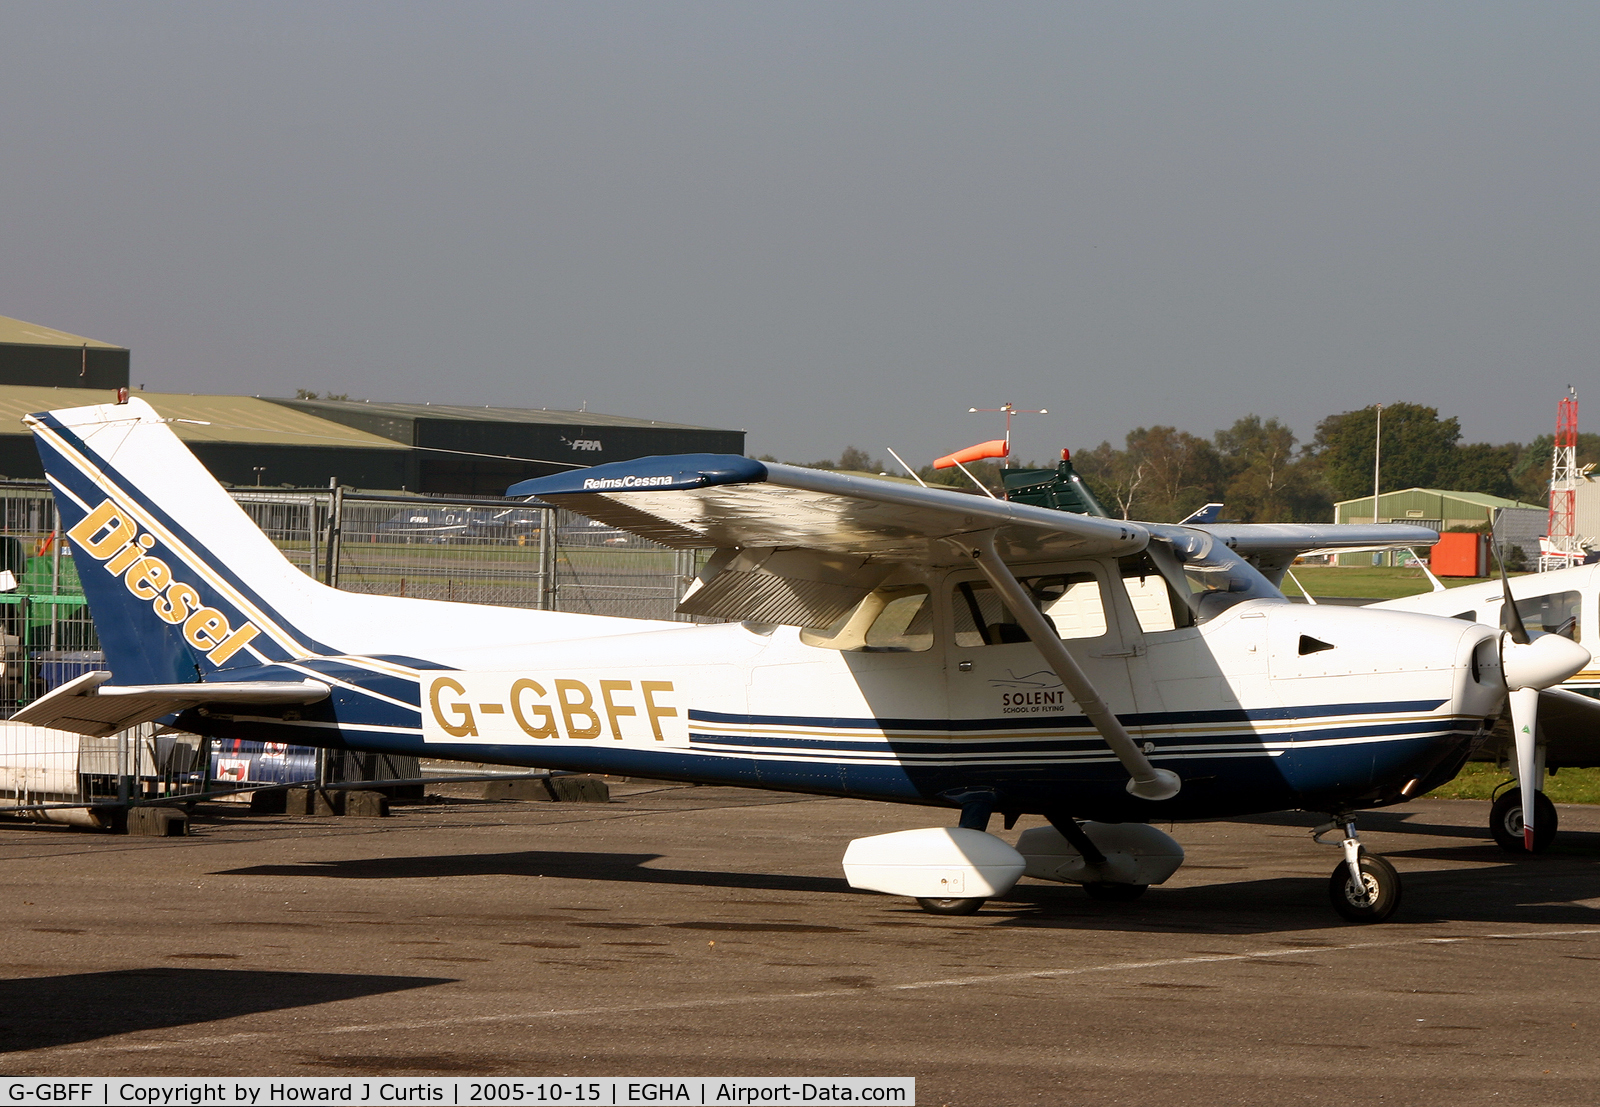 G-GBFF, 1977 Reims F172N Skyhawk C/N 1565, Privately owned.